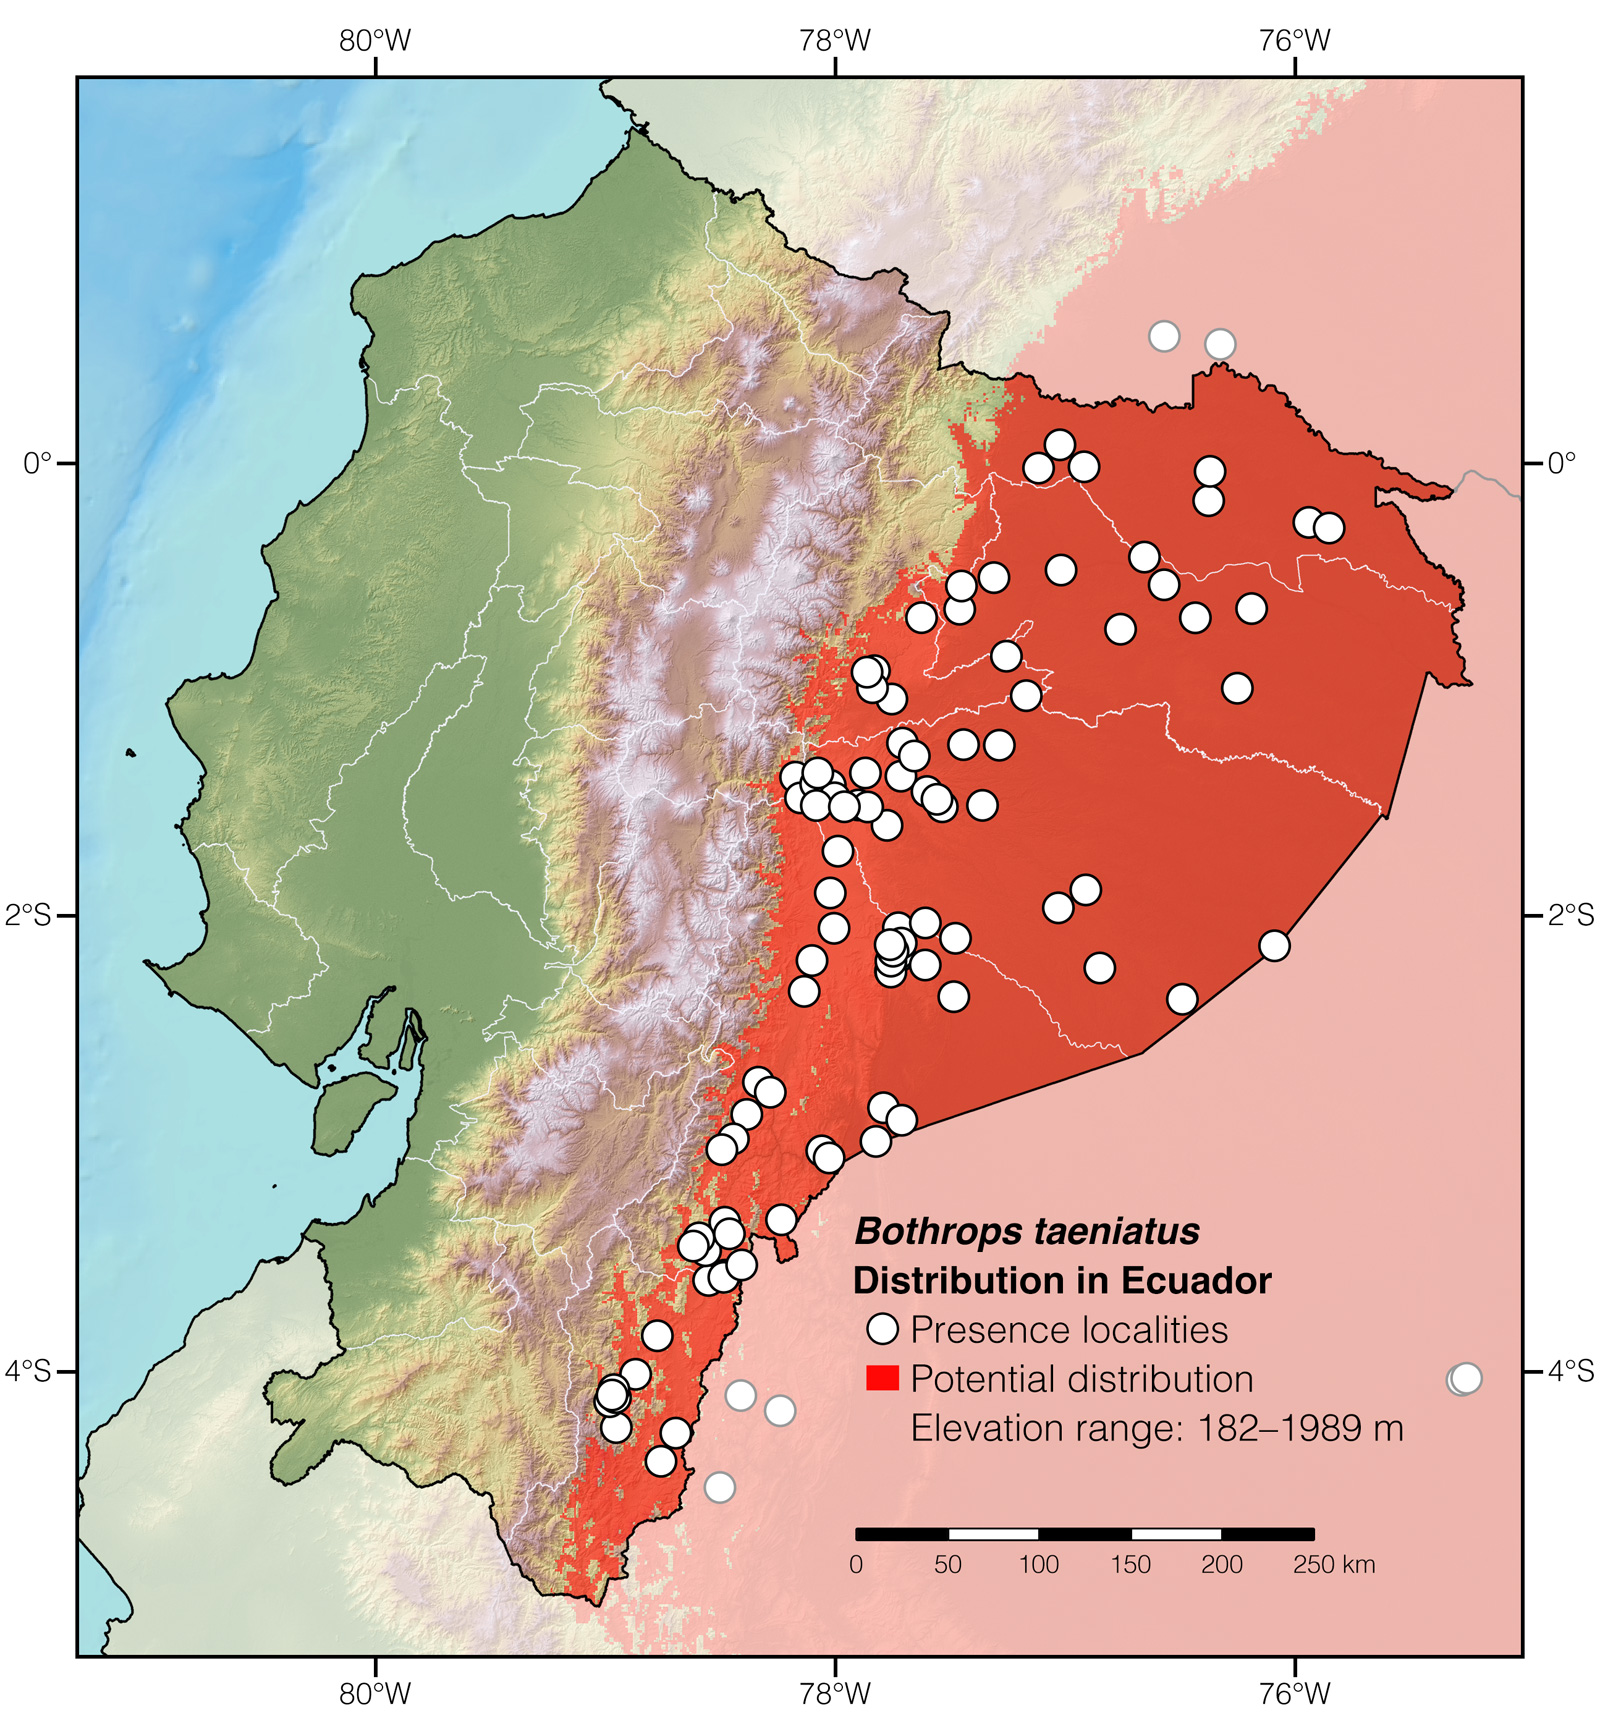 Distribution of Bothrops taeniatus in Ecuador